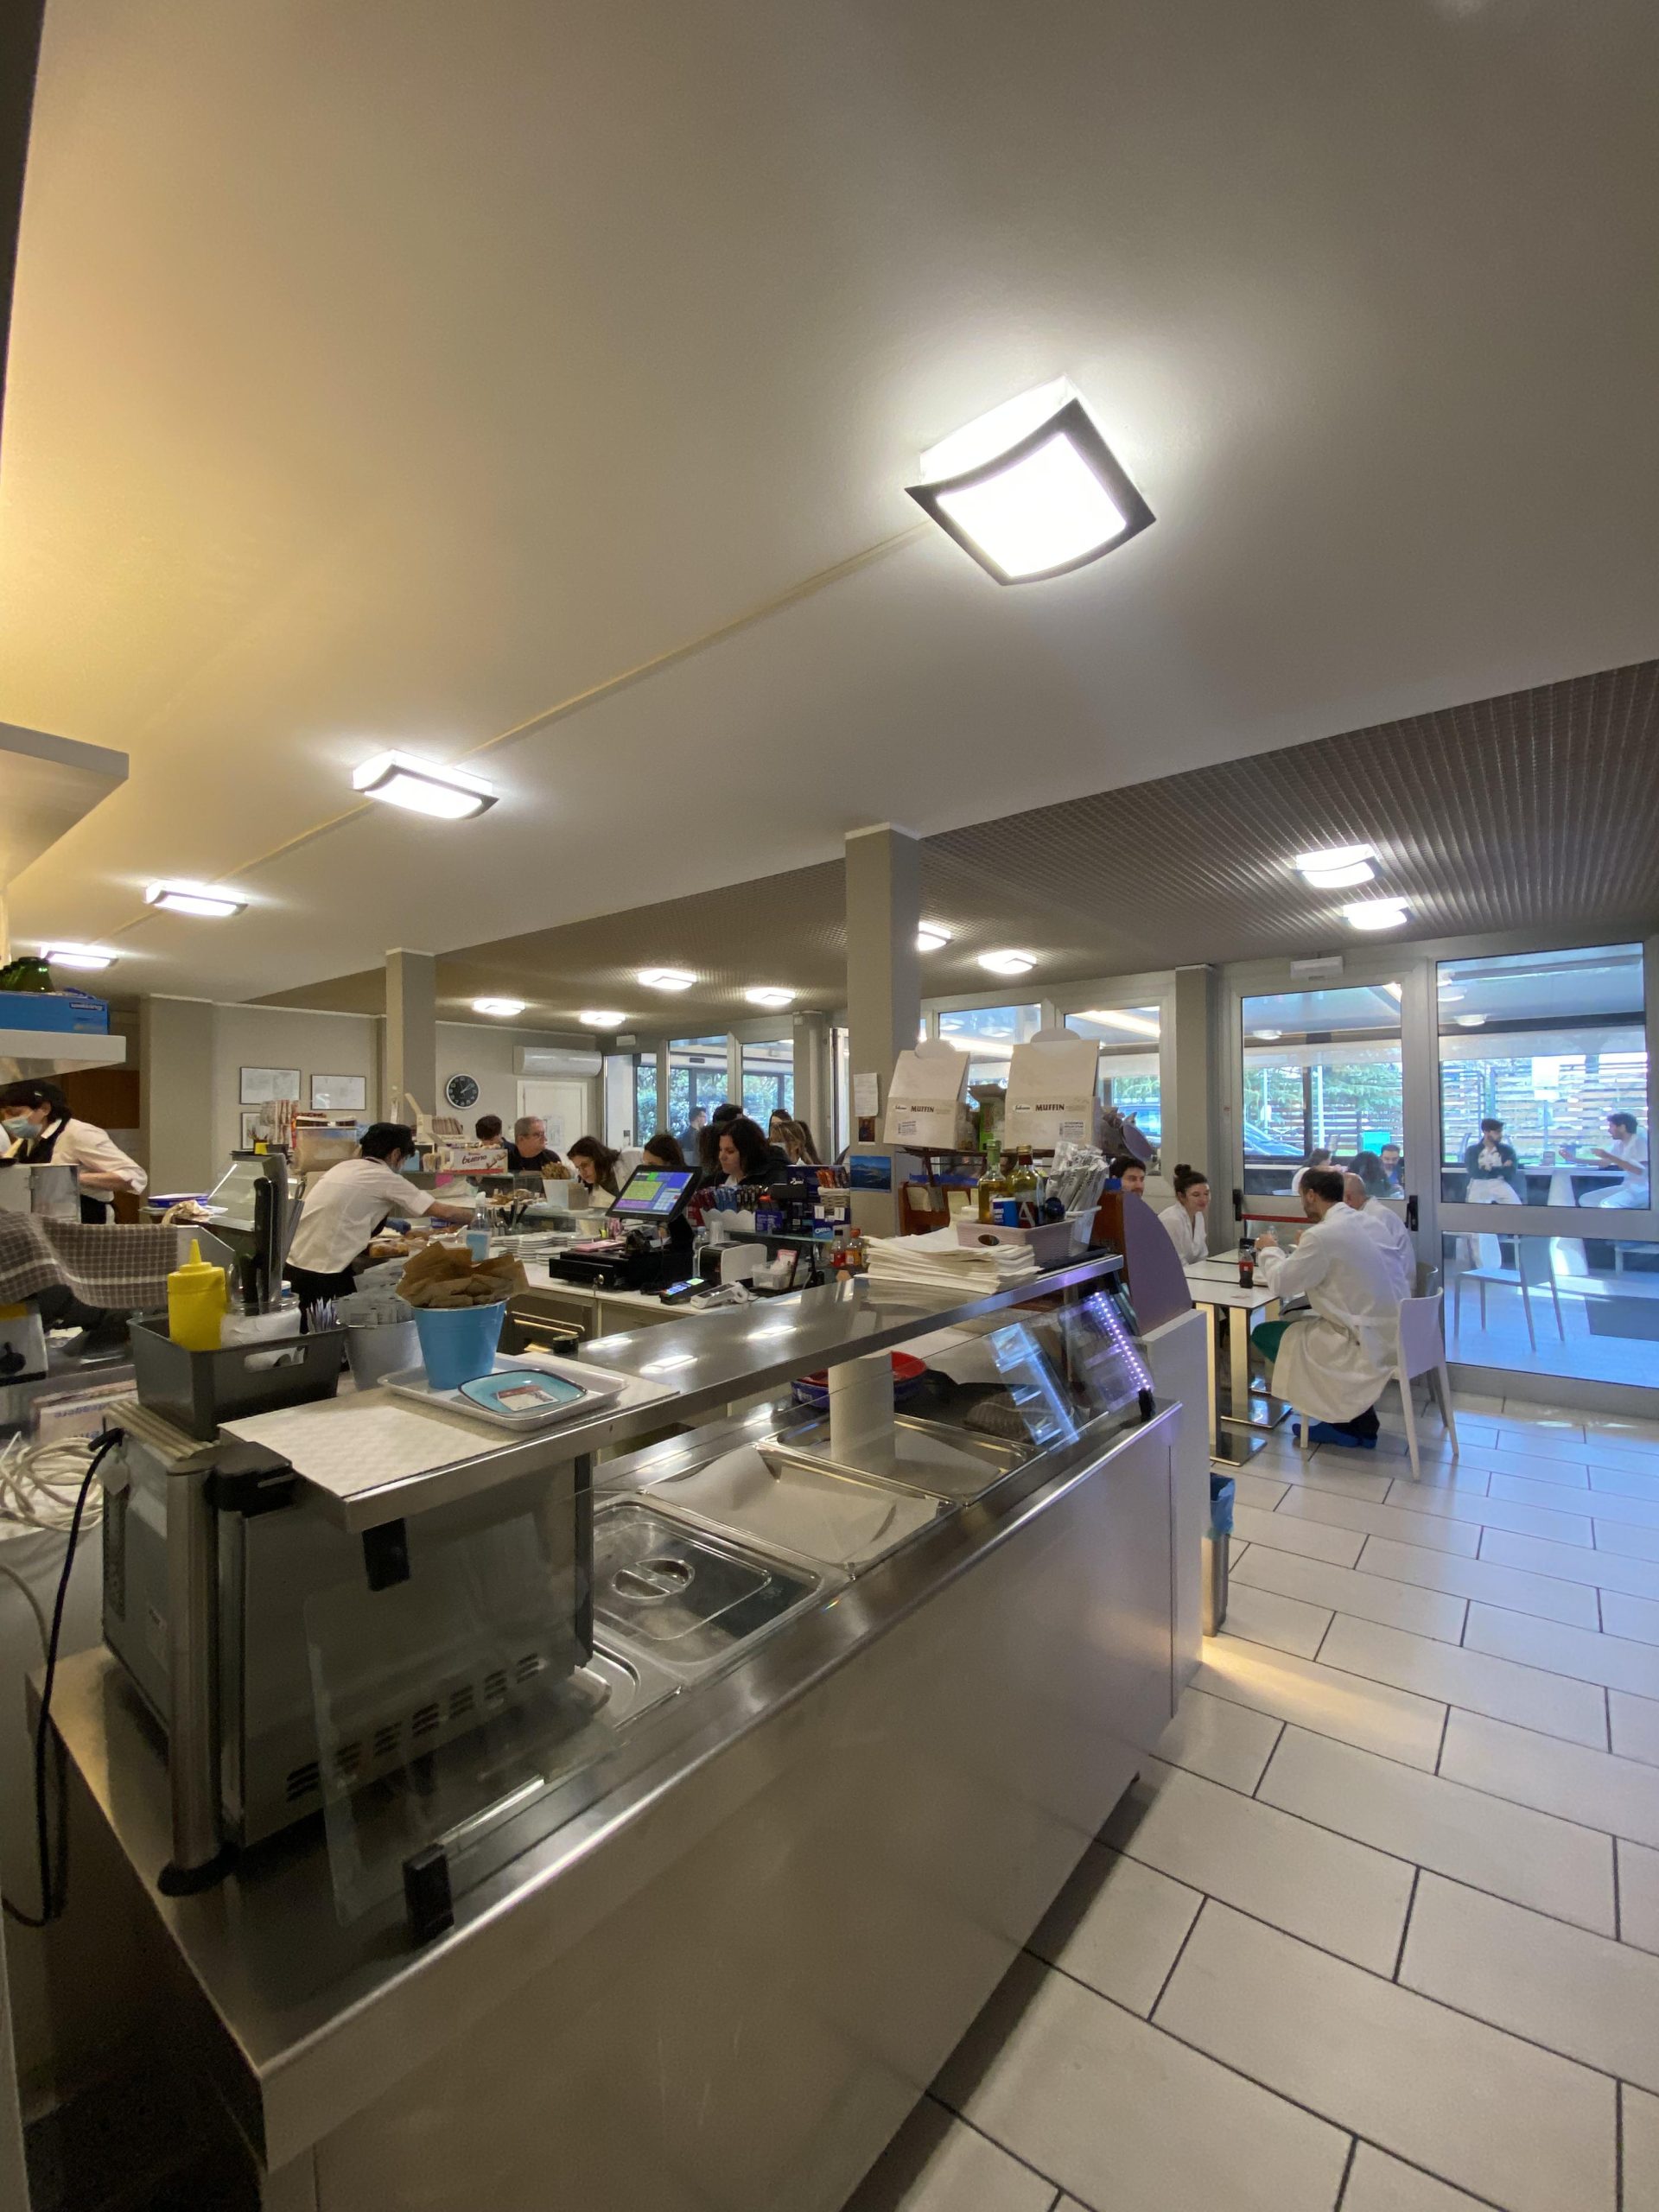 Medicine Laboratory of University of Padova